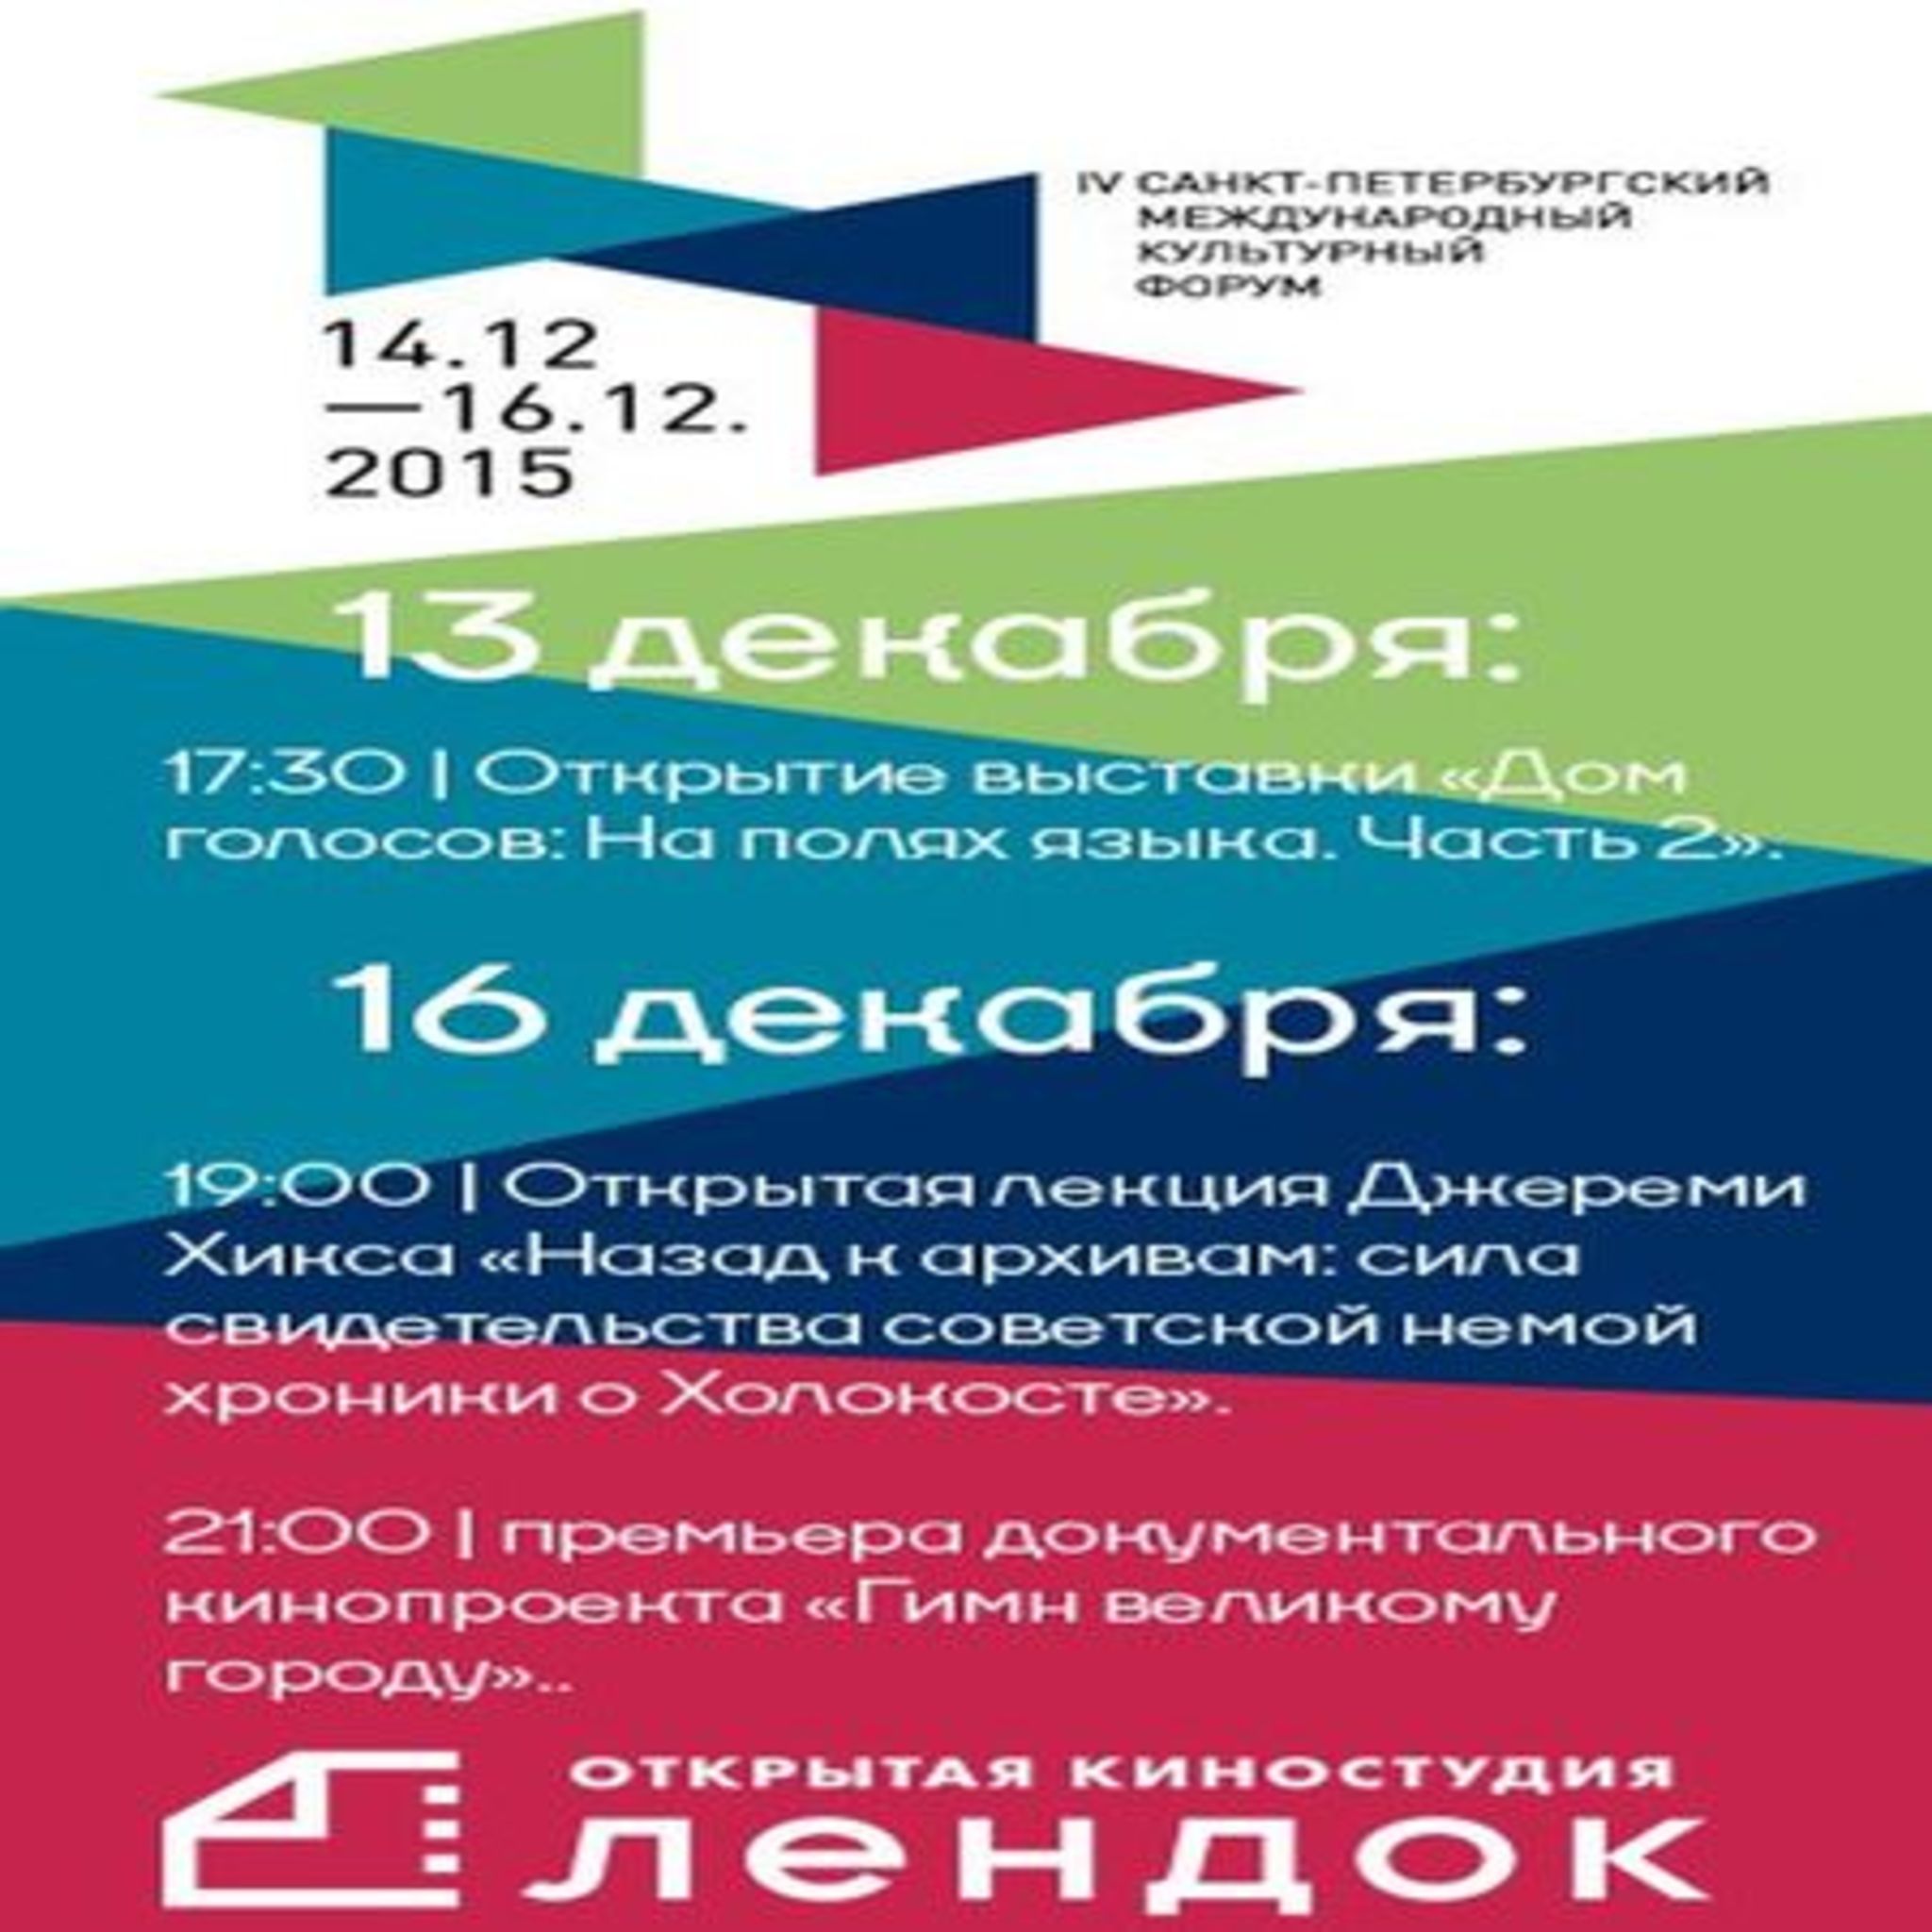 IV Cultural Forum on Lendoke